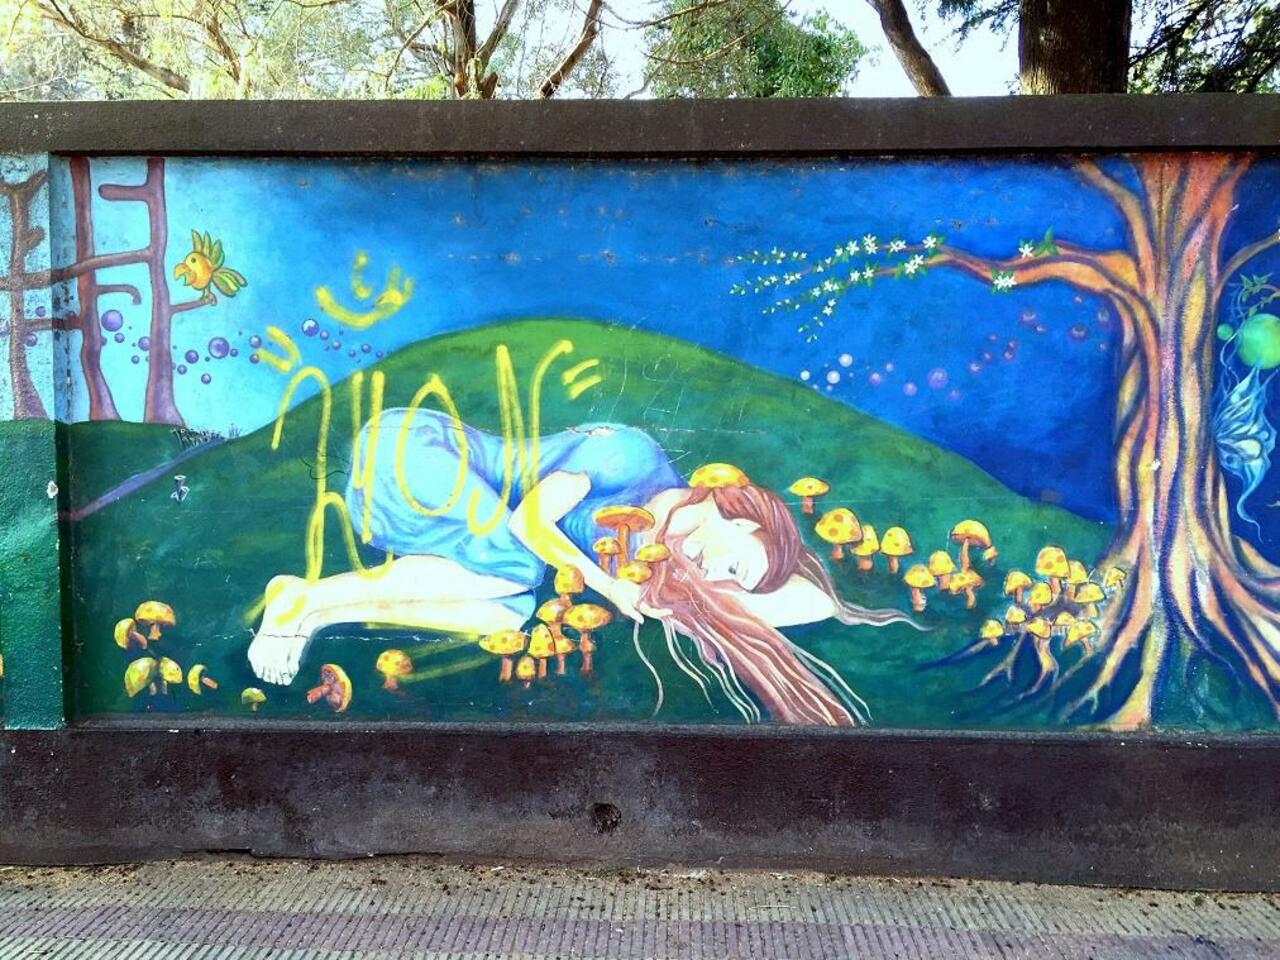 #Graffiti de hoy: < The sleeping beauty of the forest > calle 9, 66y67 #LaPlata #Argentina #StreetArt #UrbanArt http://t.co/hKn0Cm8Aj4